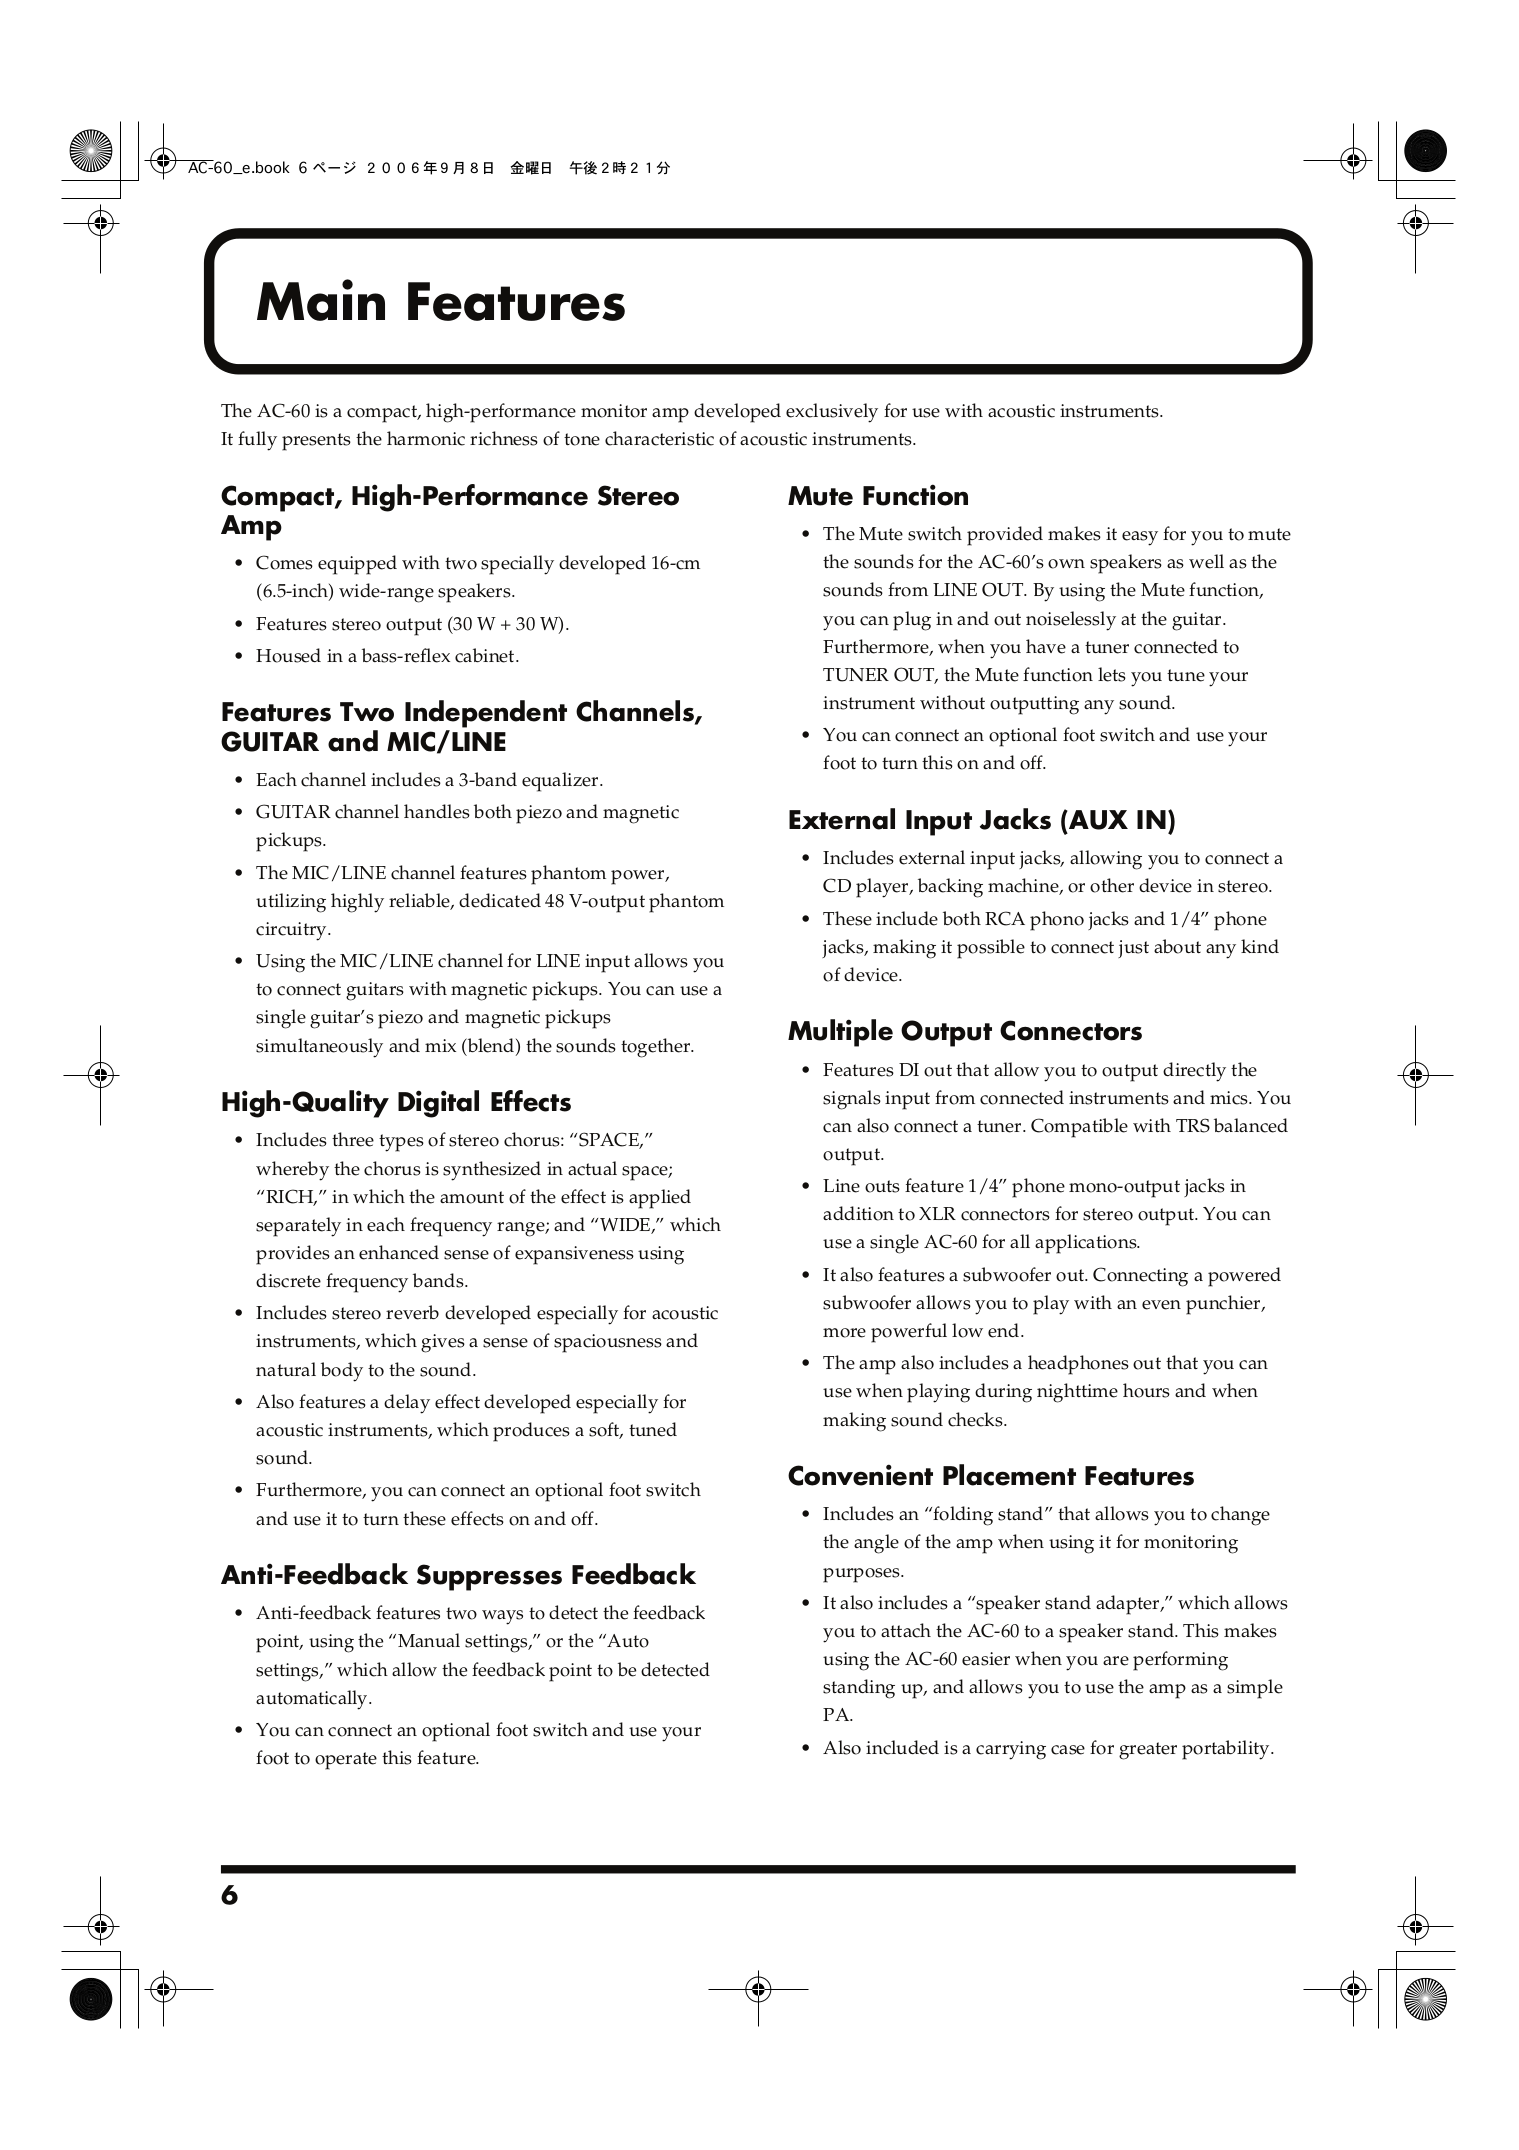 PDF manual for Roland Amp AC-60